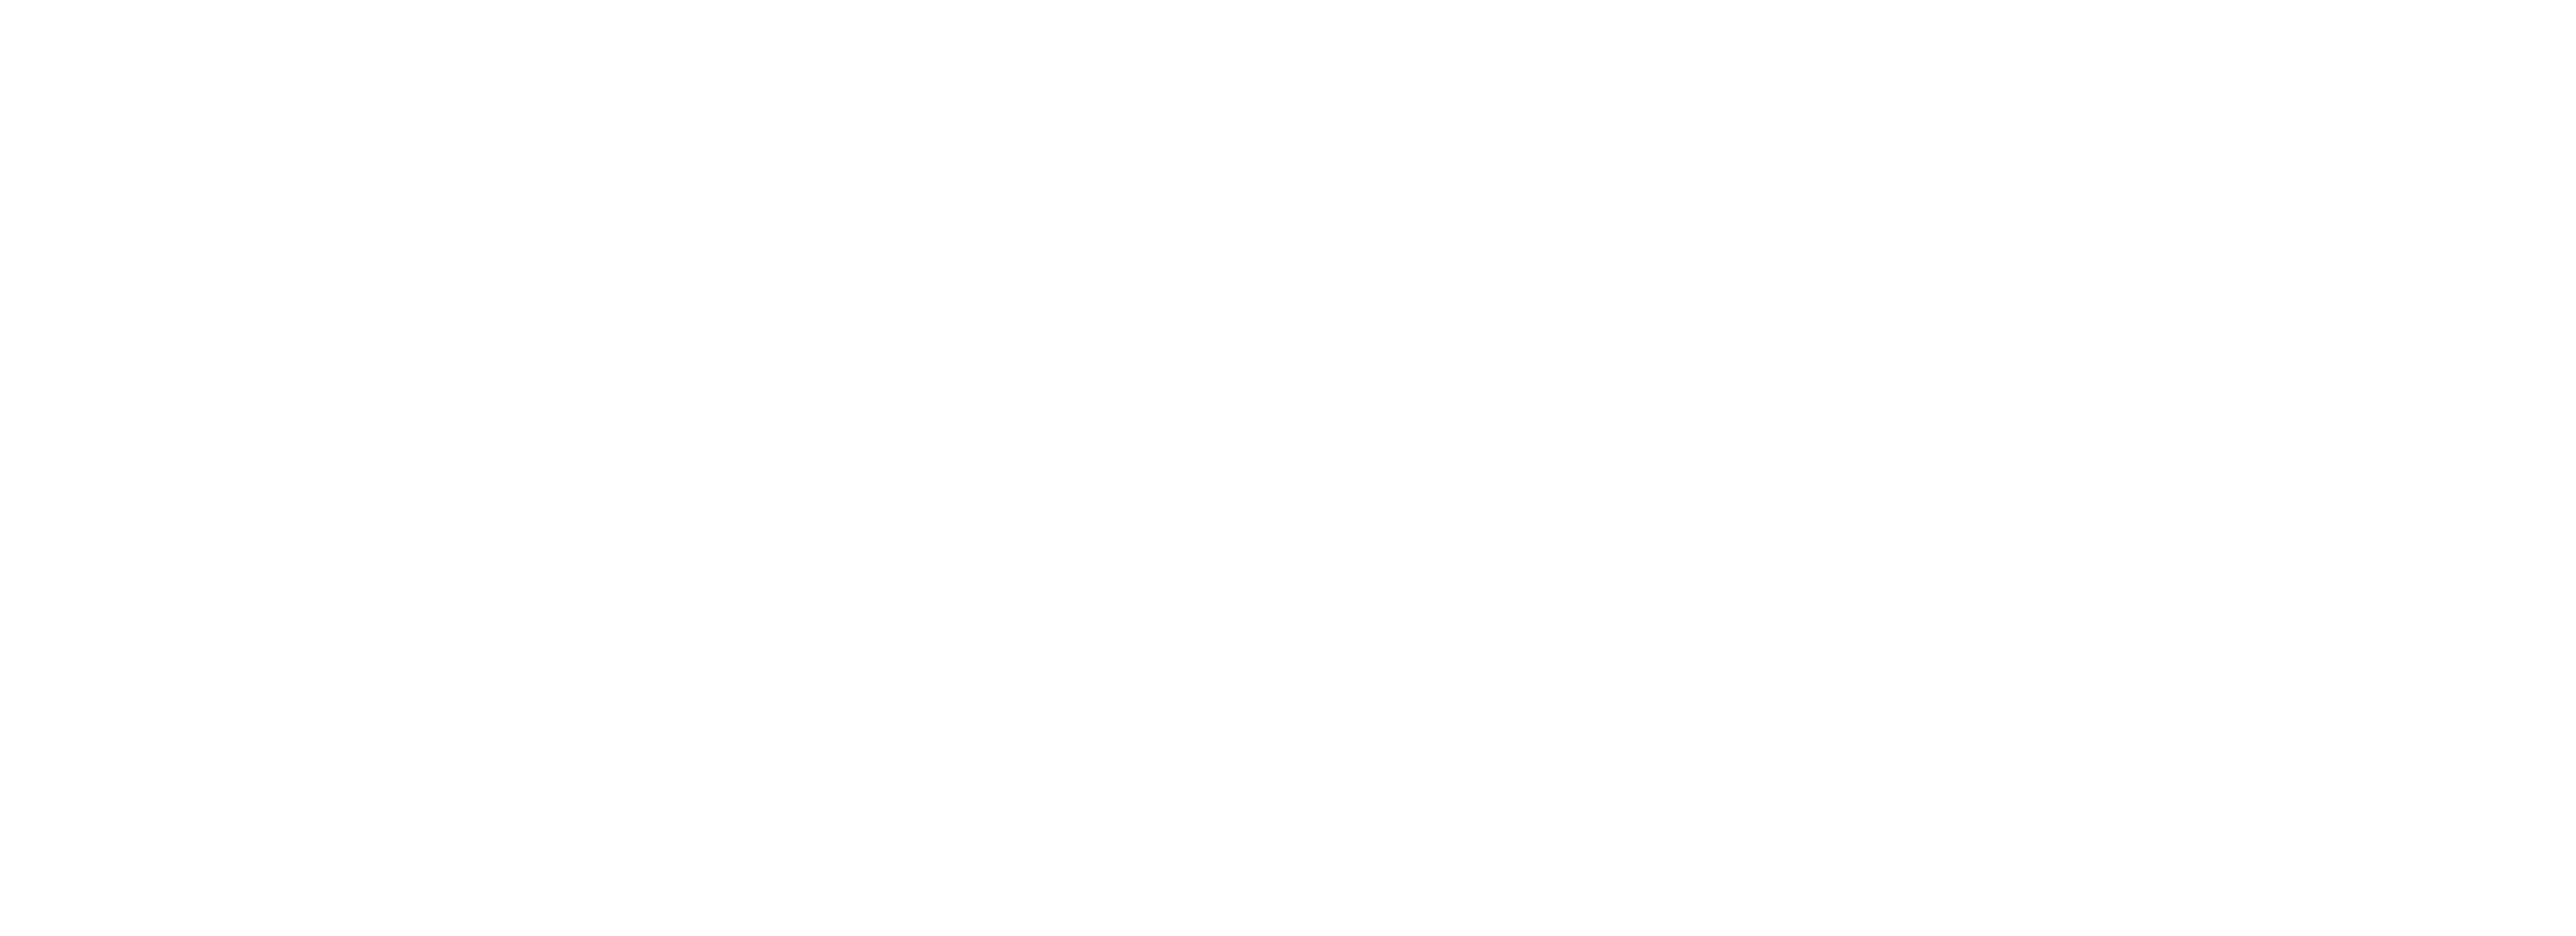 The Lazarus Effect logo